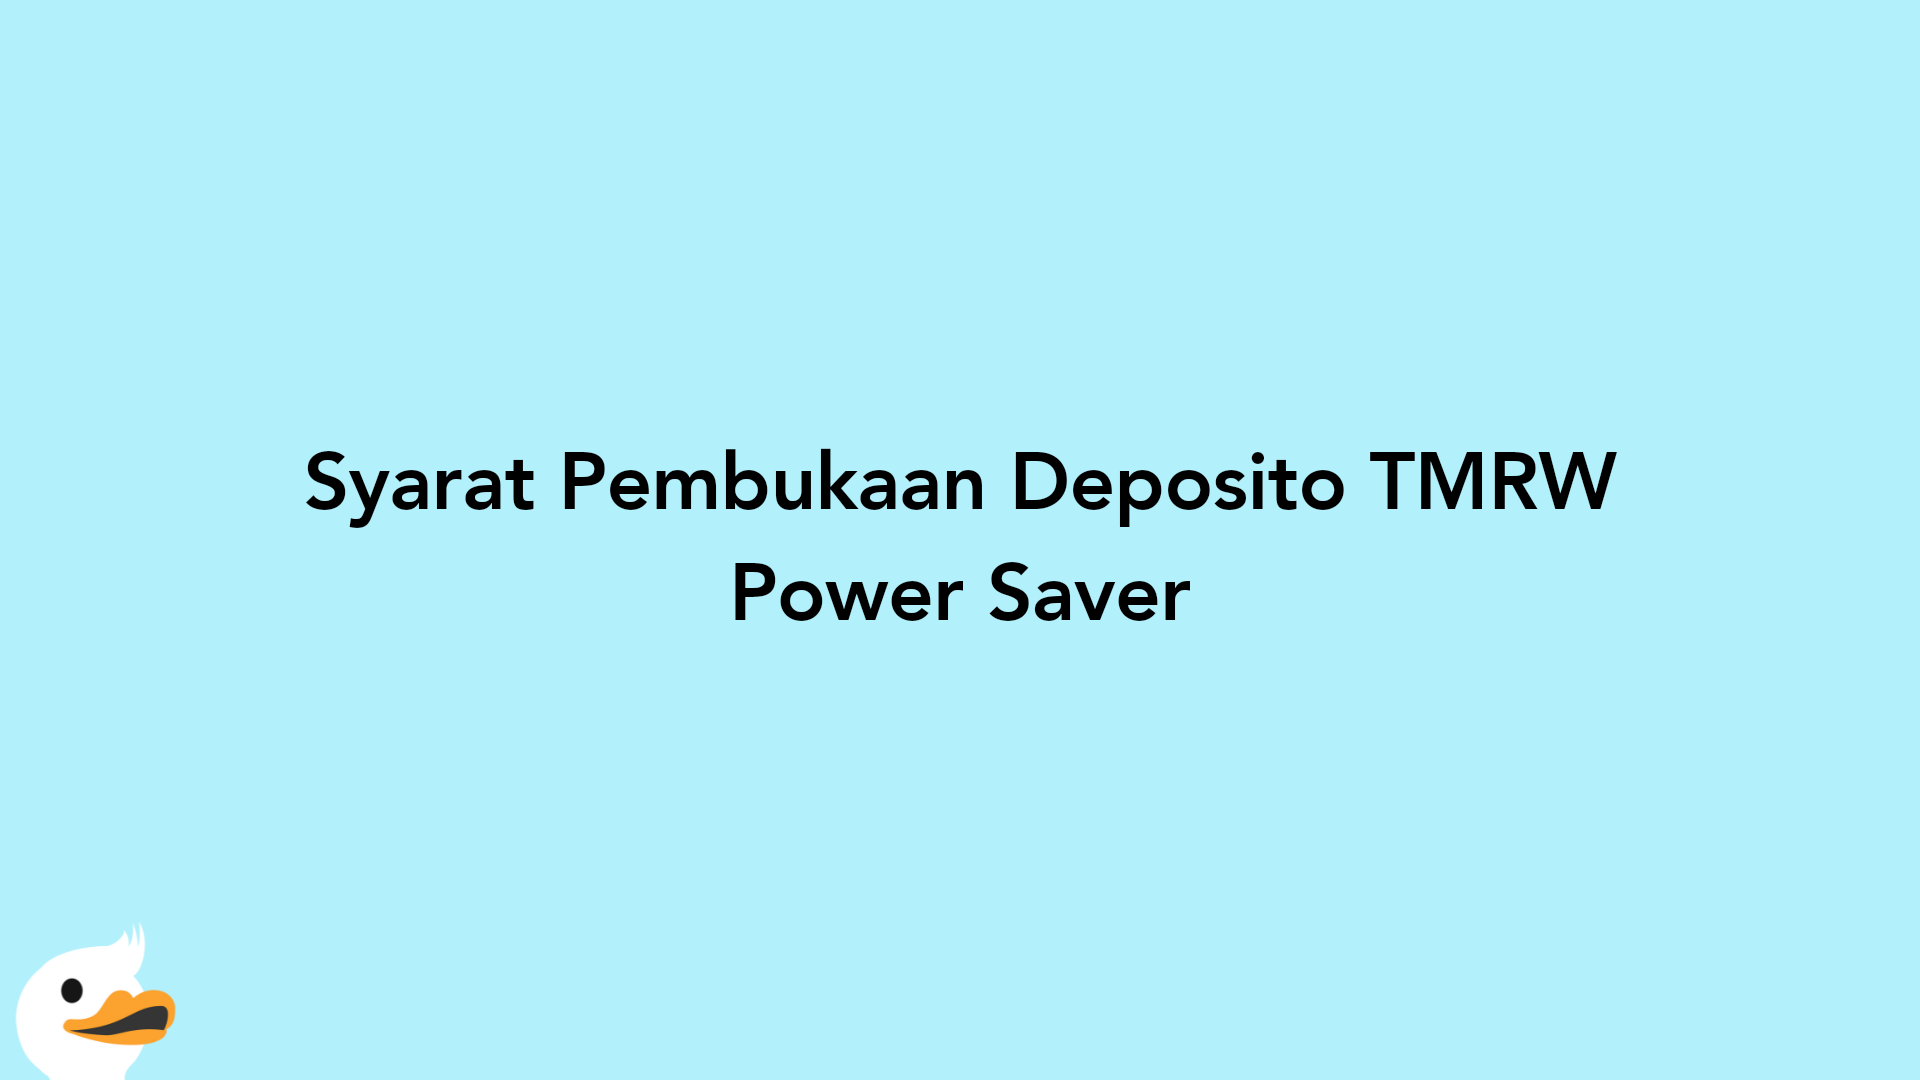 Syarat Pembukaan Deposito TMRW Power Saver